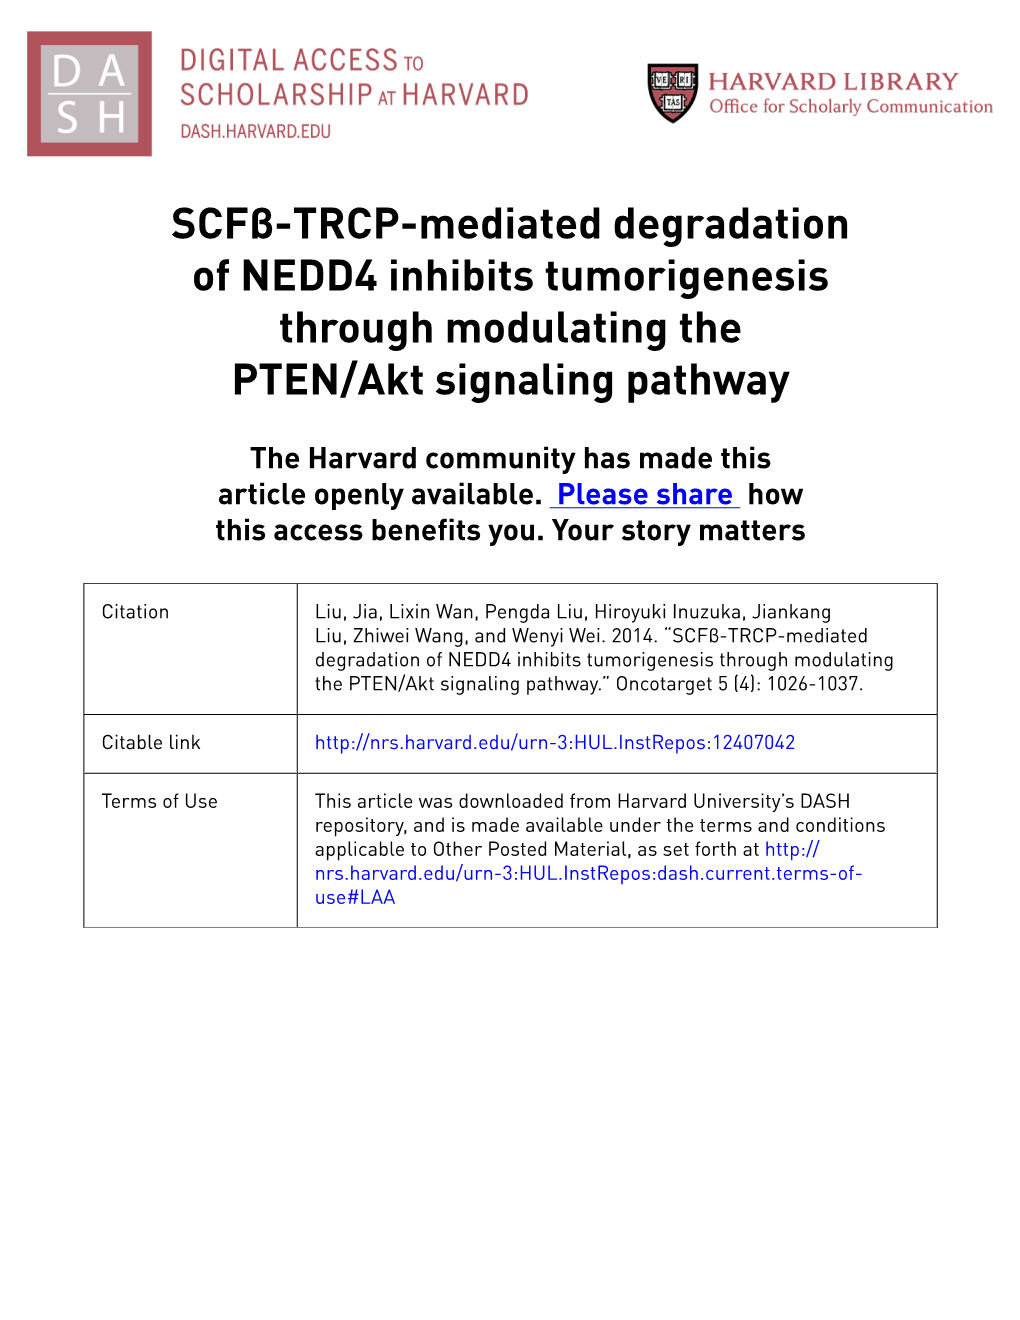 Scfβ-TRCP-Mediated Degradation of NEDD4 Inhibits Tumorigenesis Through Modulating the PTEN/Akt Signaling Pathway